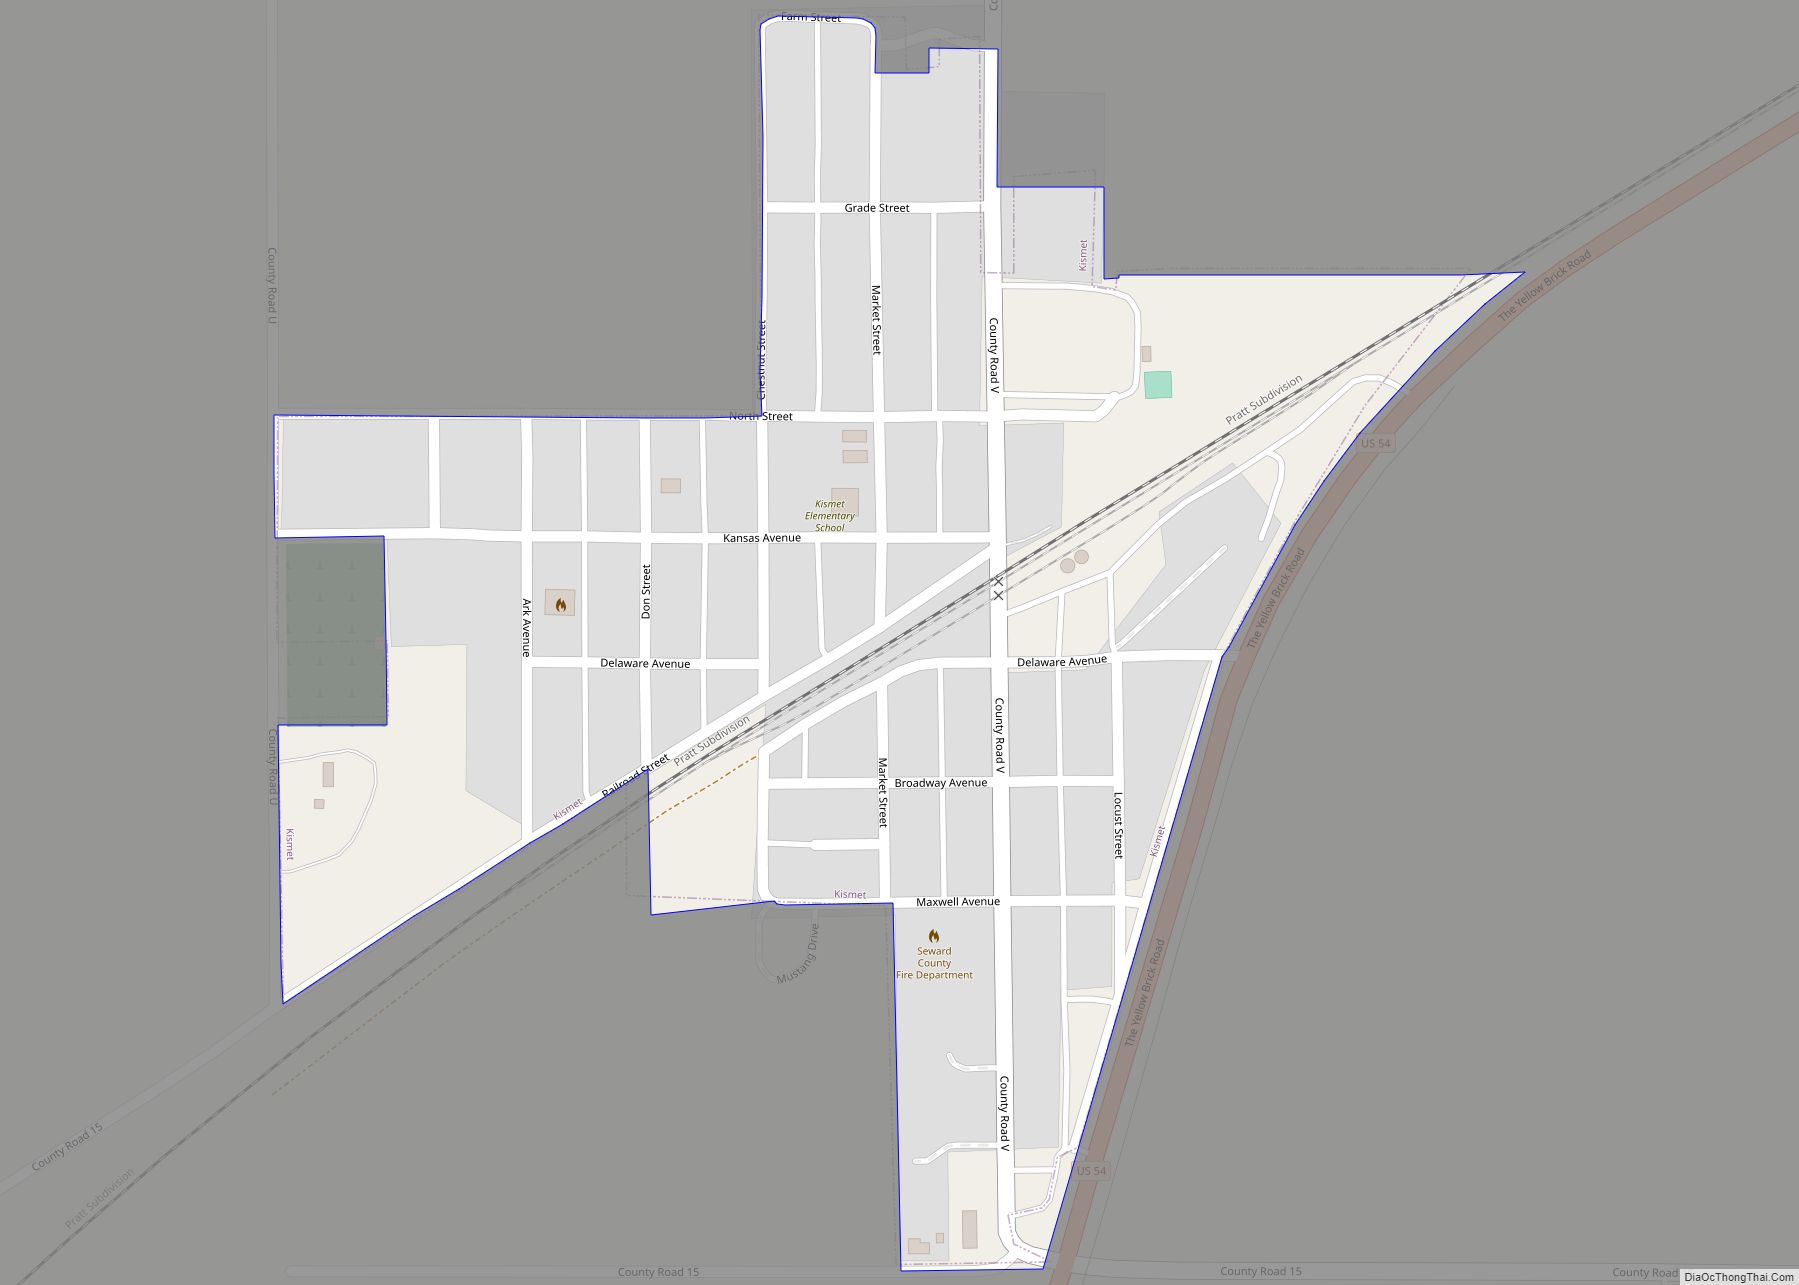 Map of Kismet city